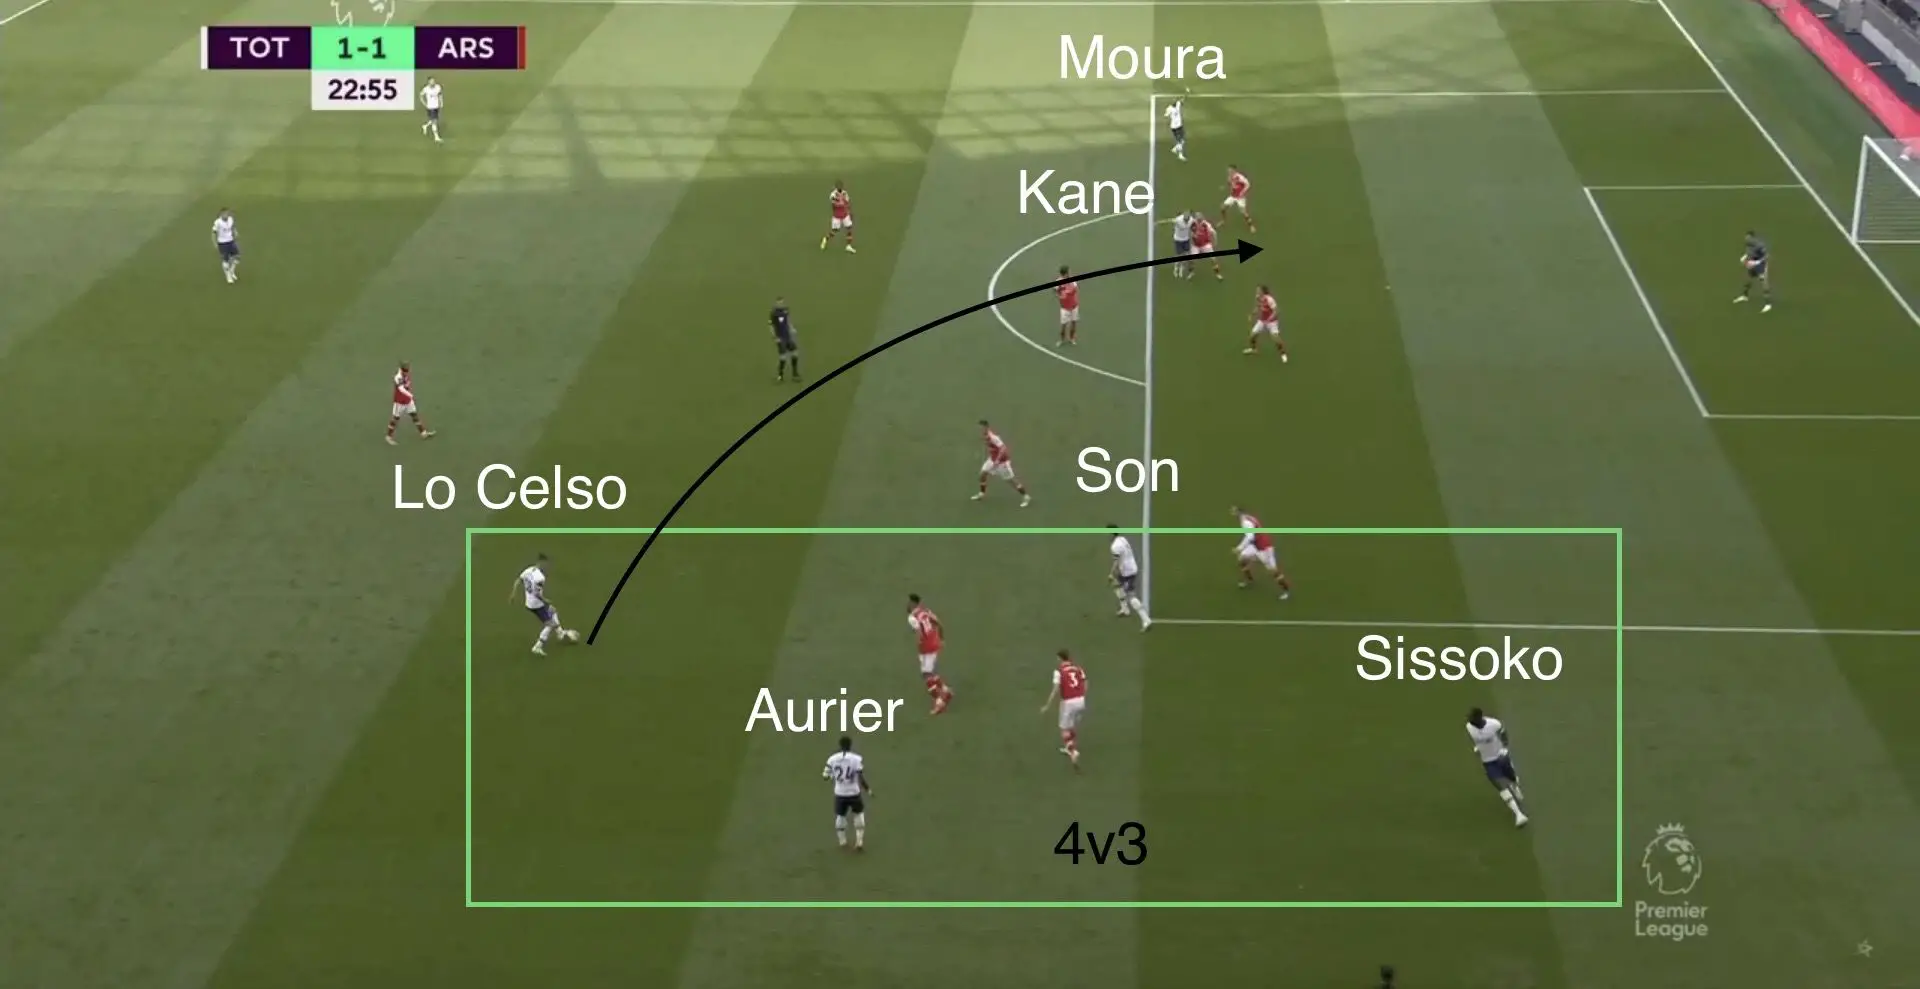 Tottenham hotspur vs Arsenal tactical analysis